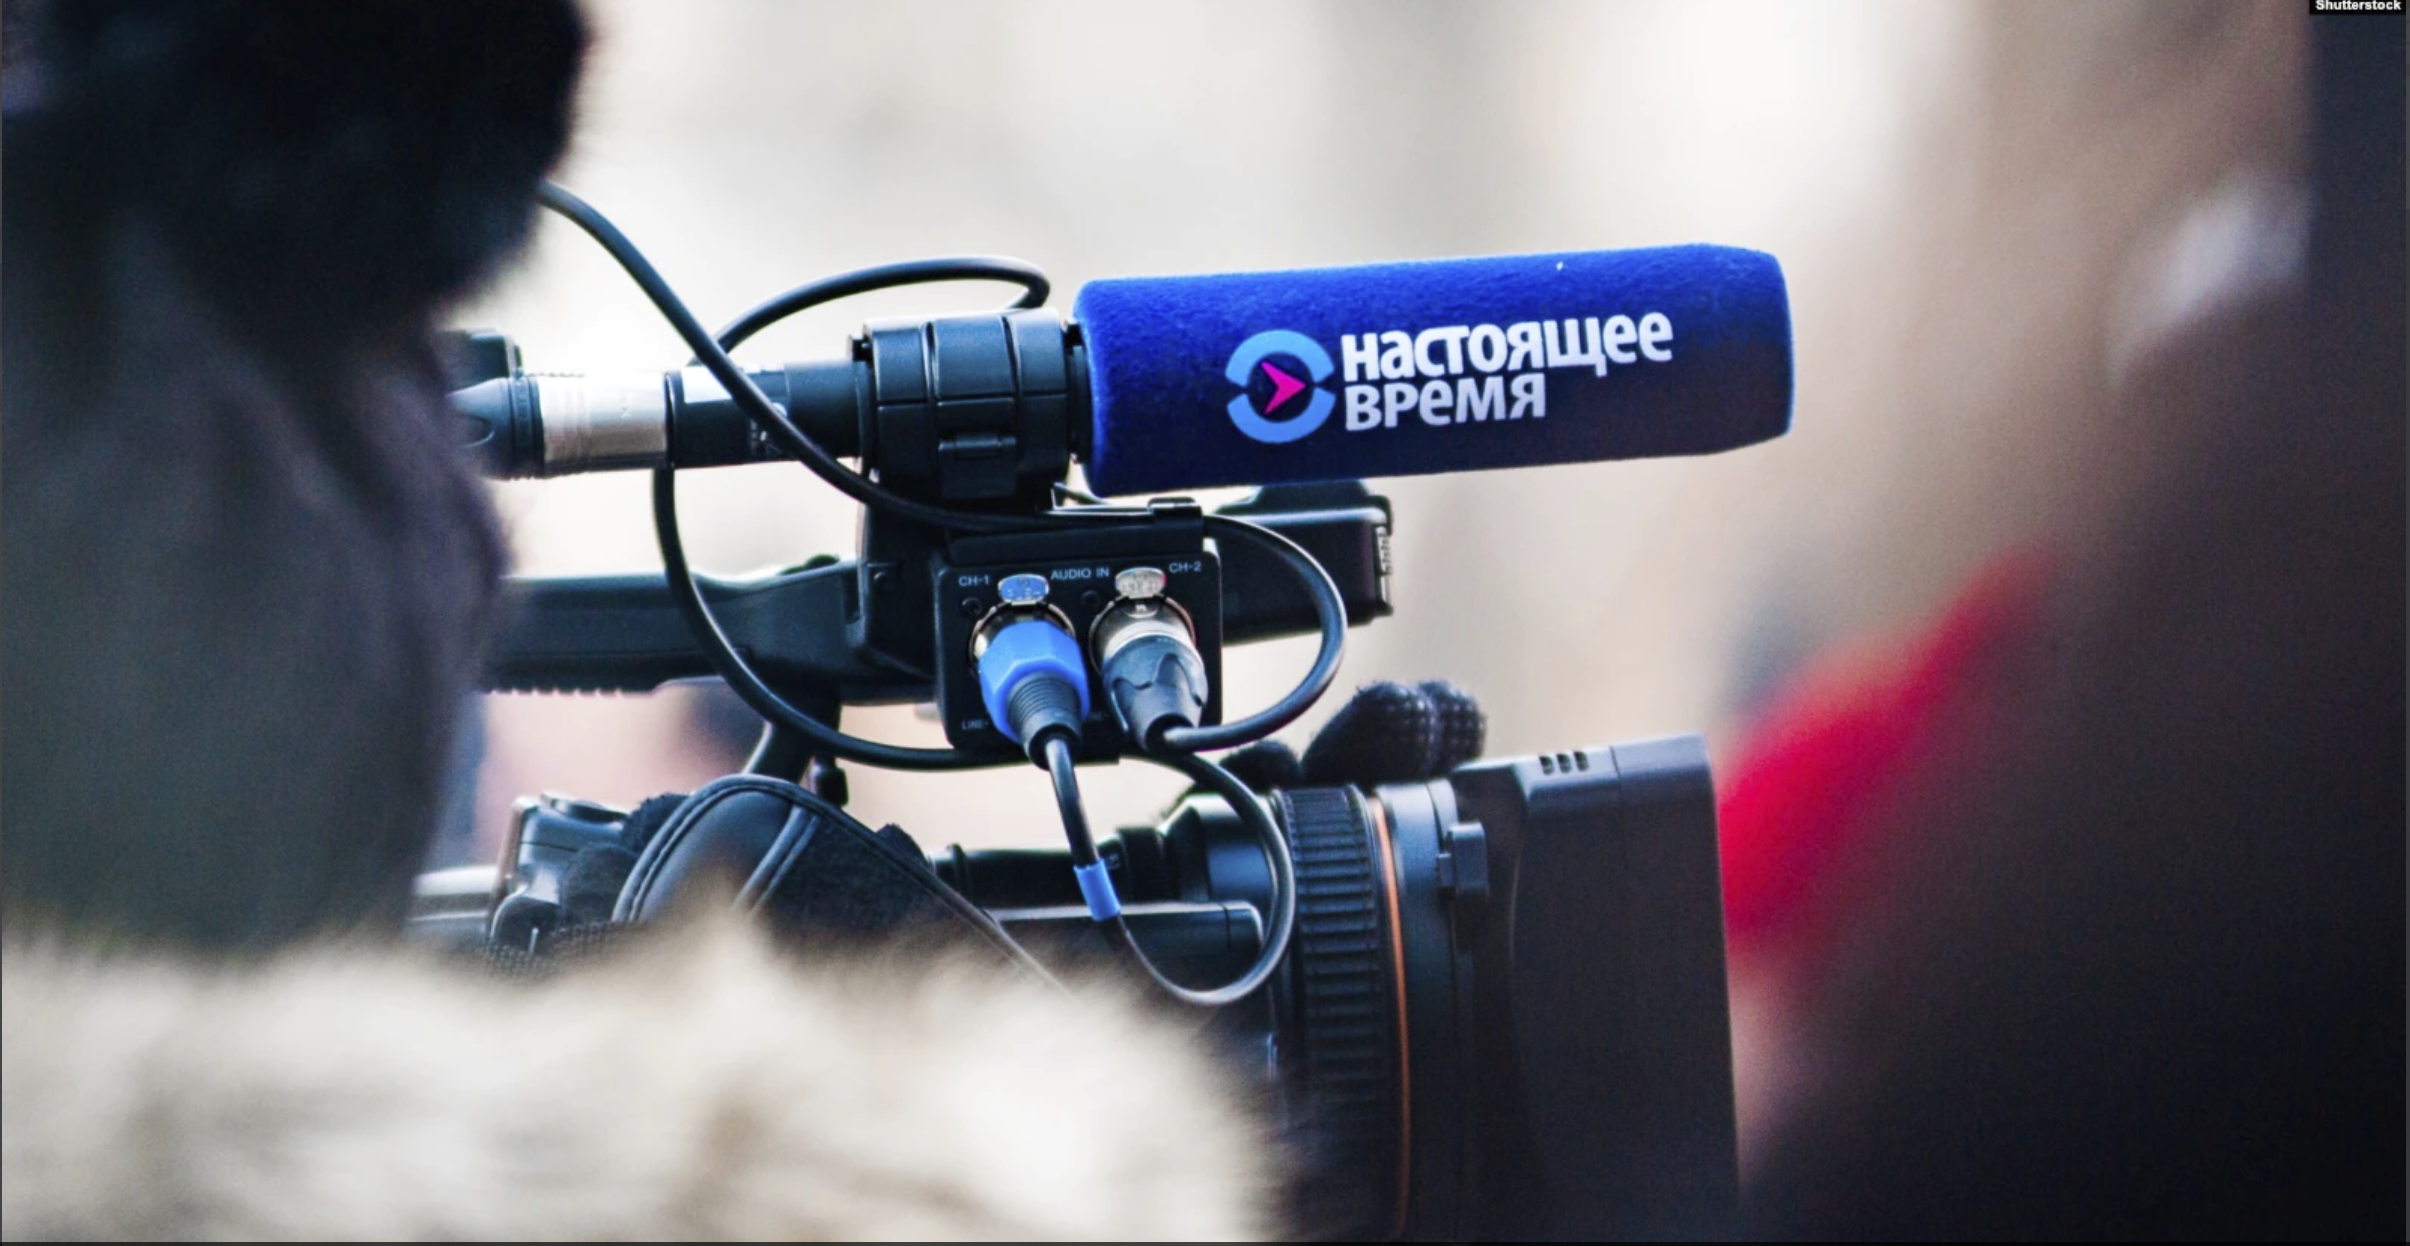 USAGM expands Russian-language programming to Europe